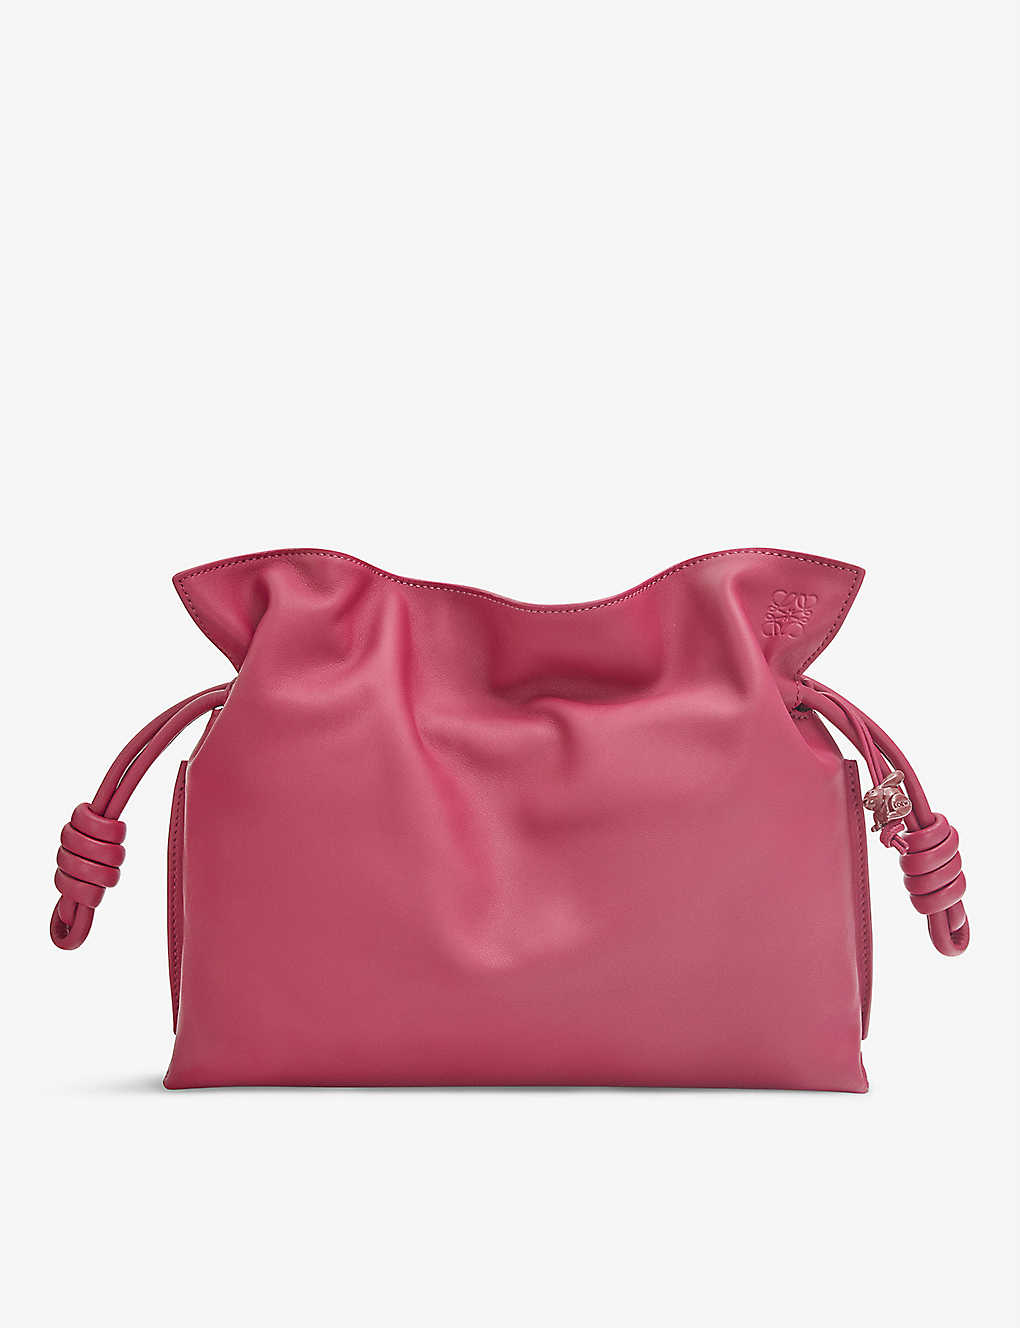 LOEWE - Flamenco leather clutch bag | Selfridges.com